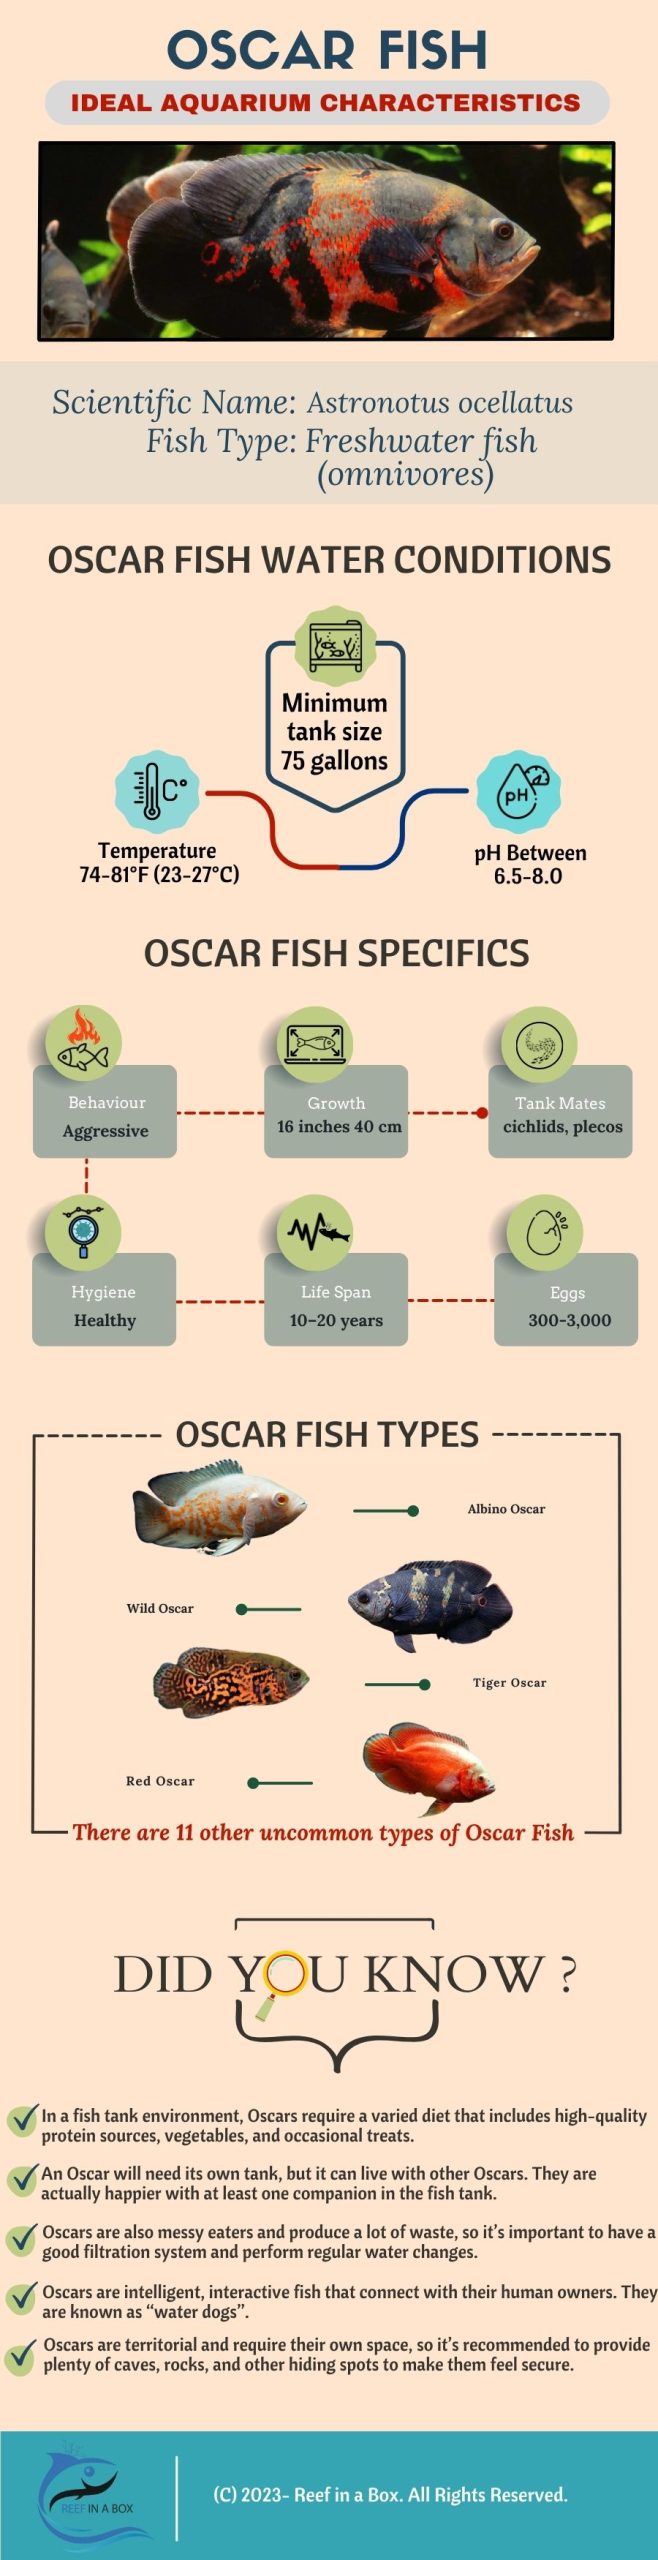 Oscar Fish Infographic